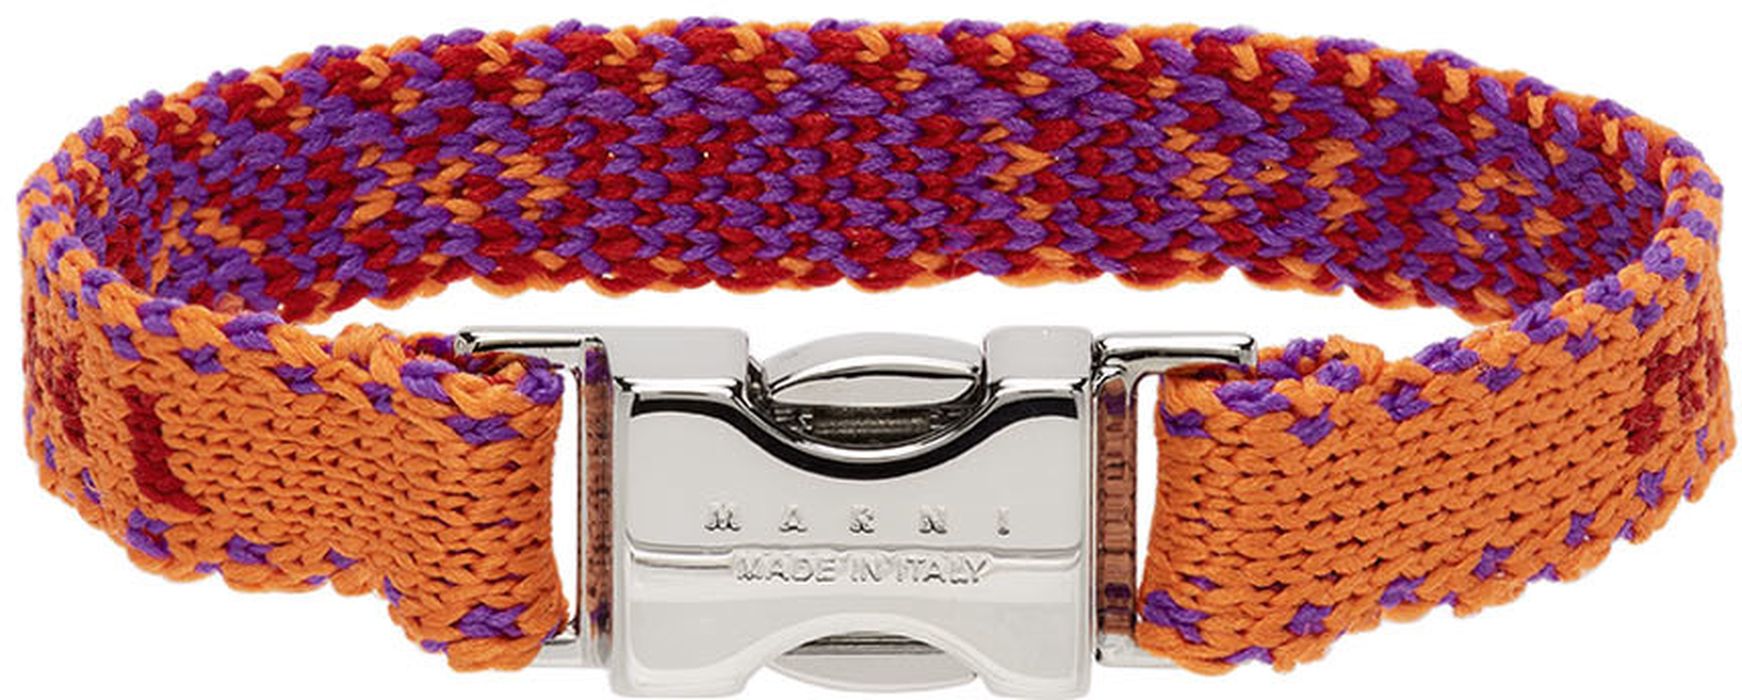 Marni Orange & Purple Crochet Ribbon Bracelet